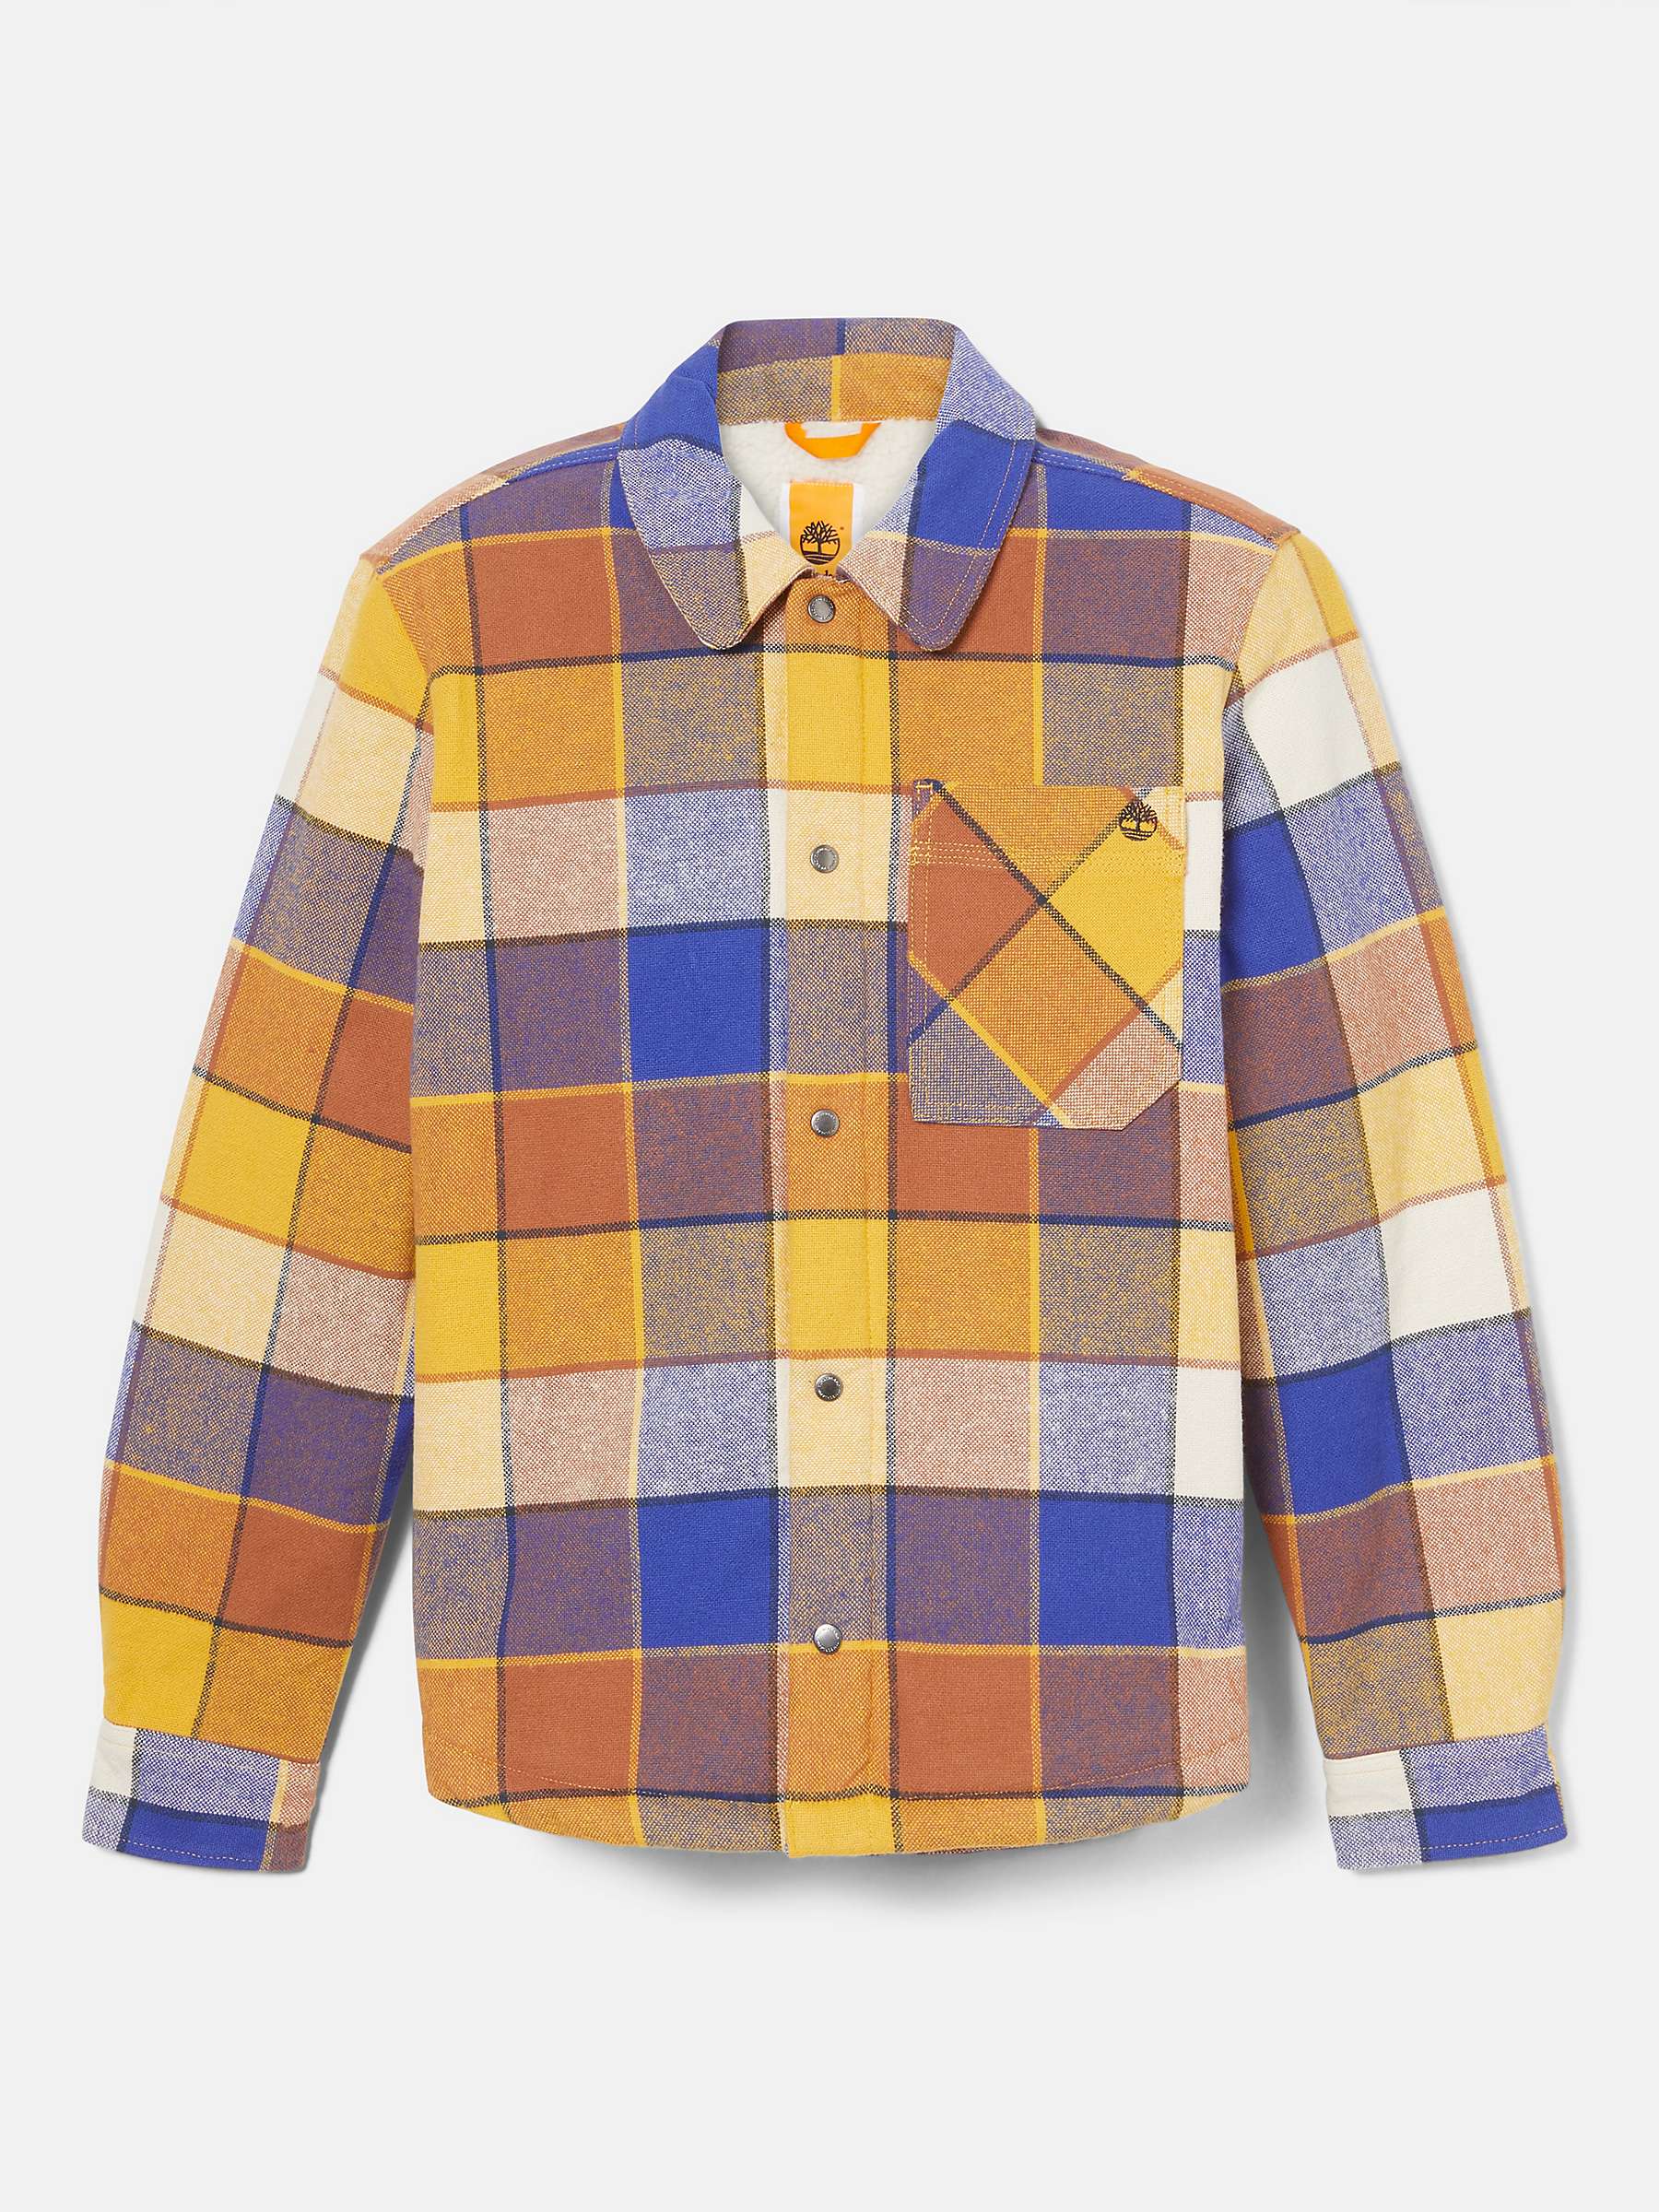 Buy Timberland Sherpa Lined Overshirt, Yellow/Multi Online at johnlewis.com